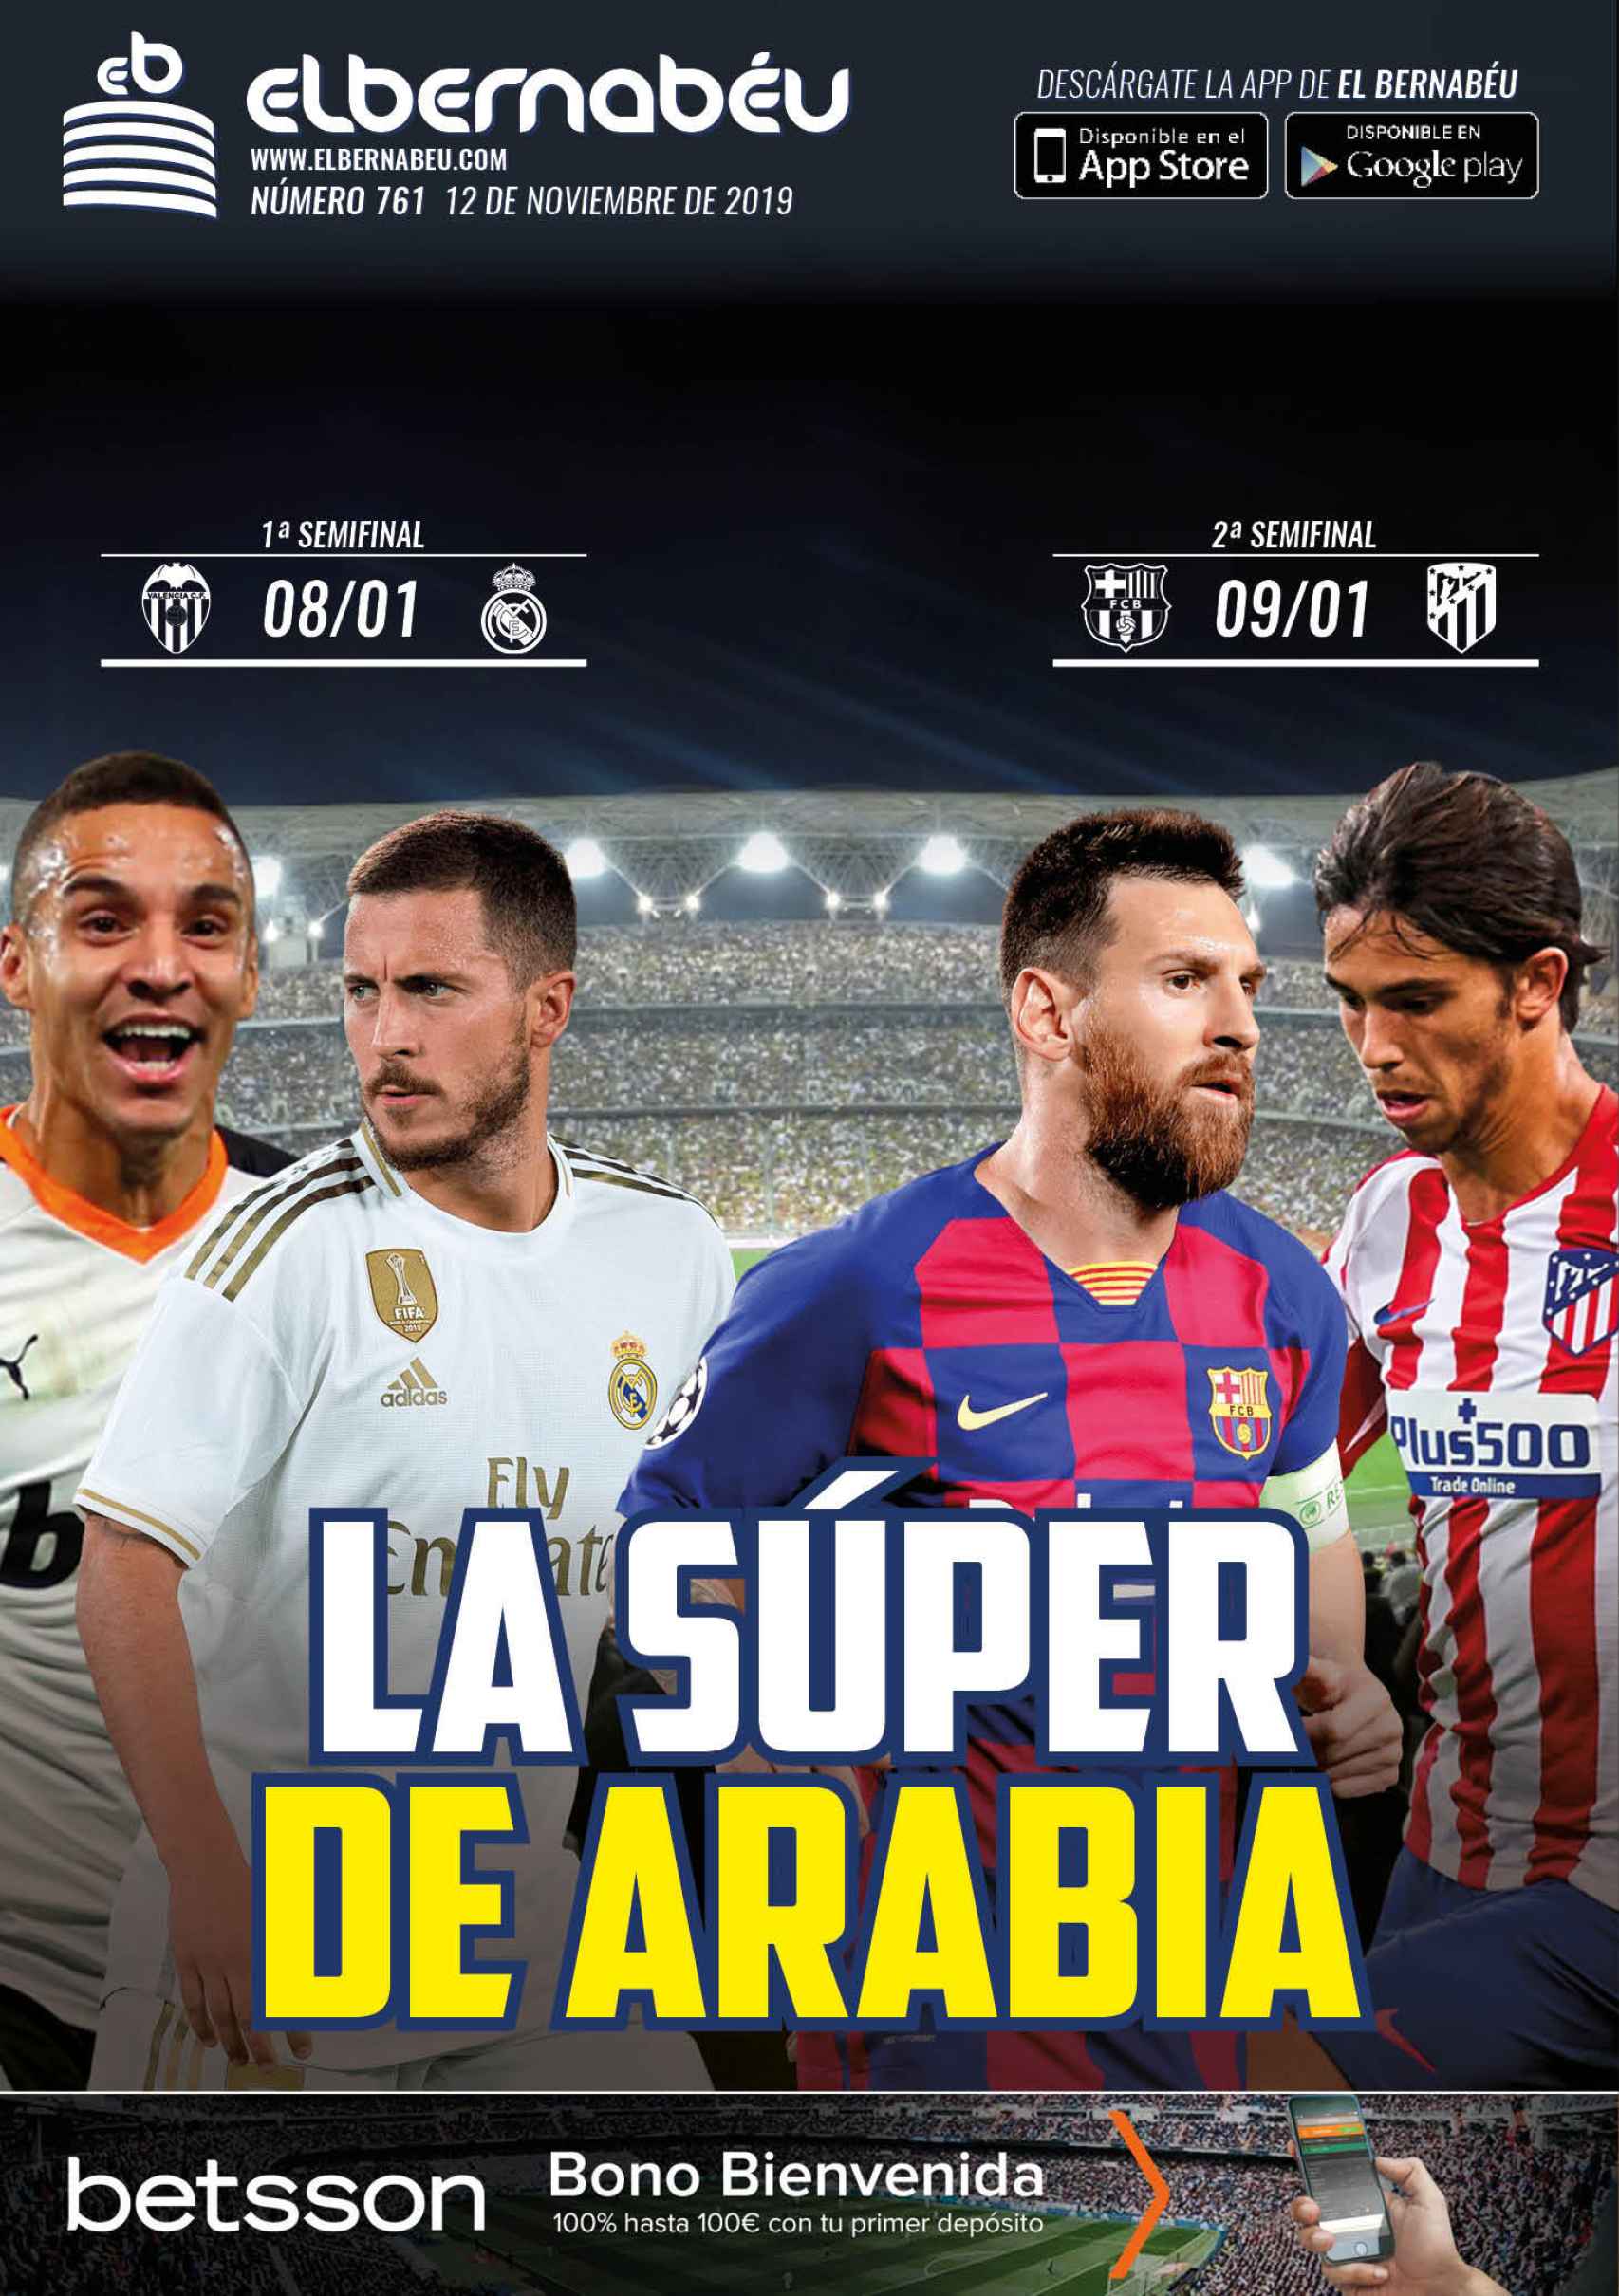 La portada de El Bernabéu (12/11/2019)